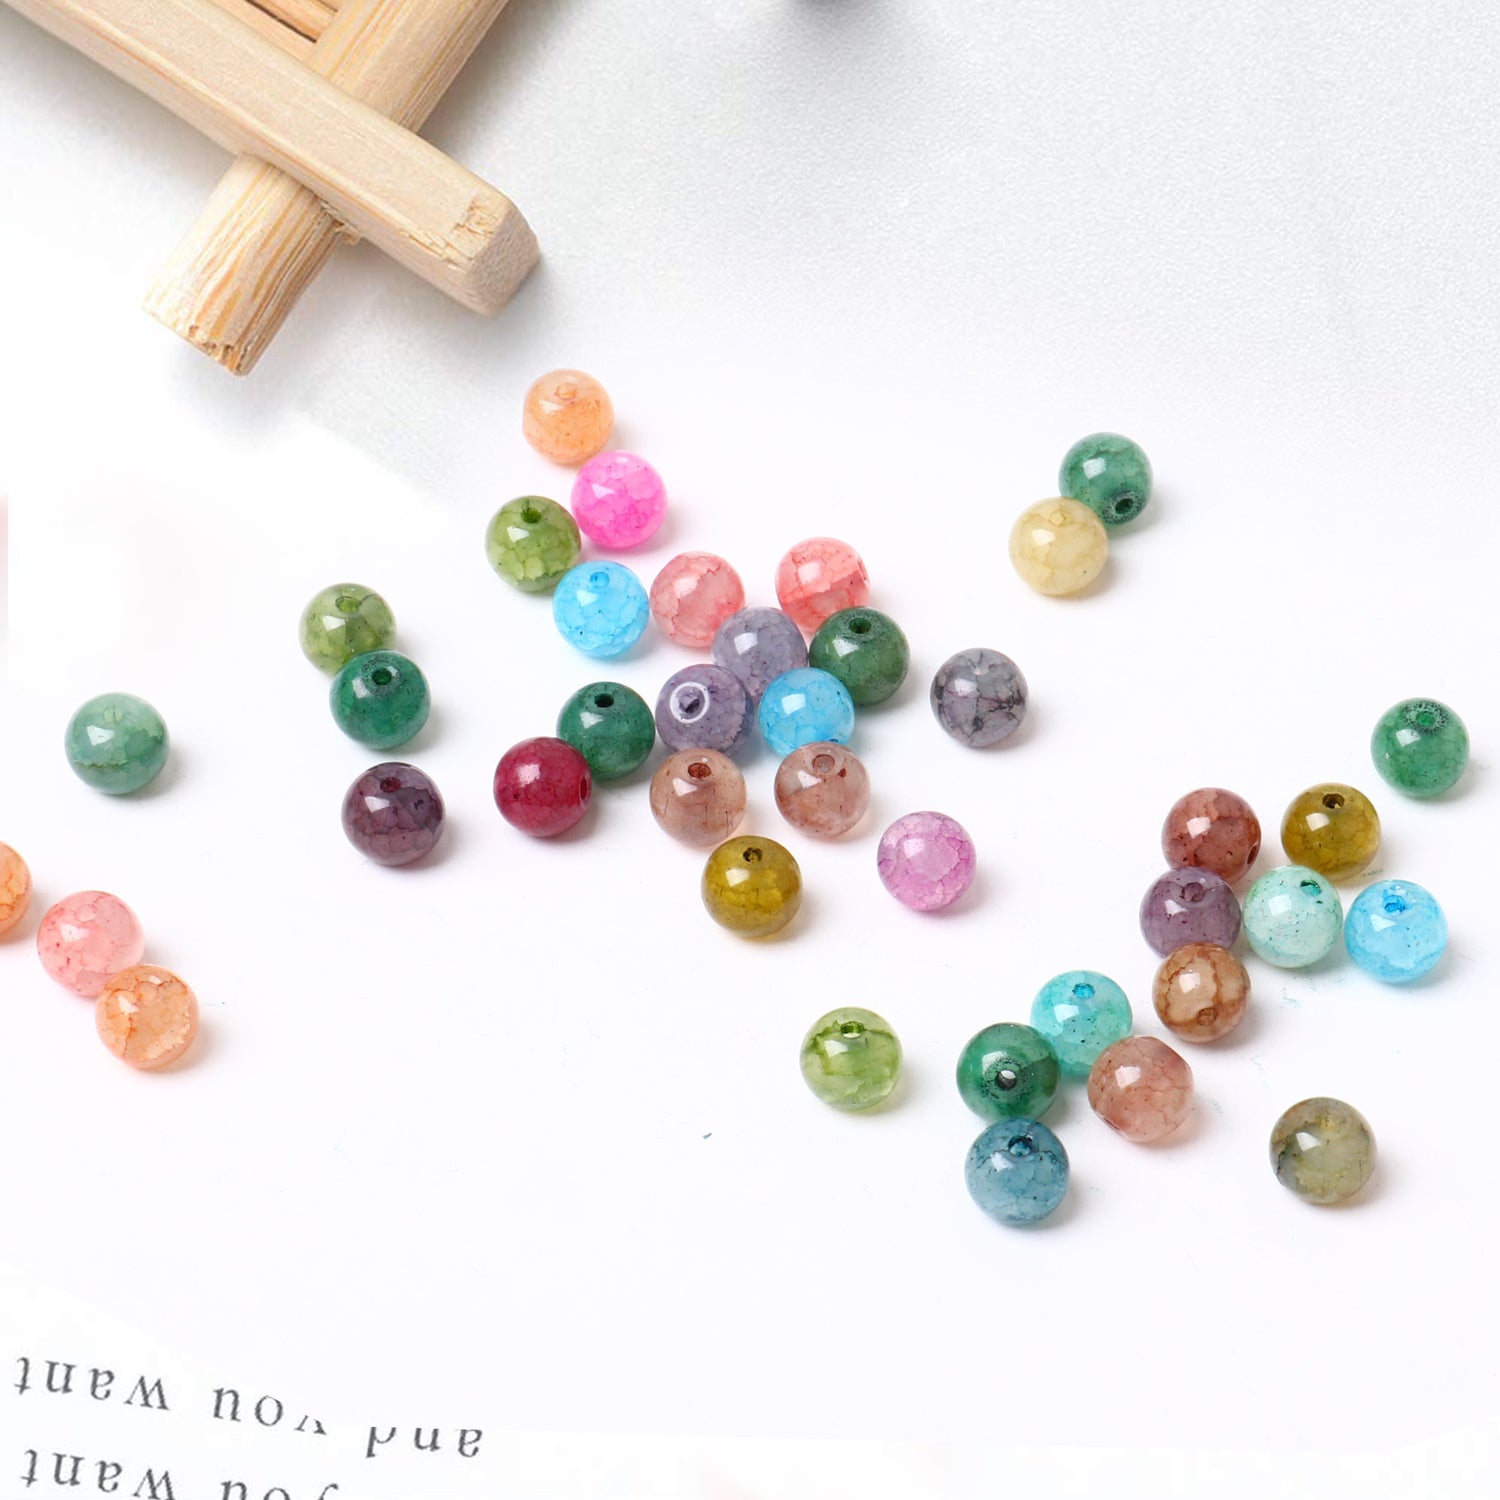 Beads & Bead Assortments